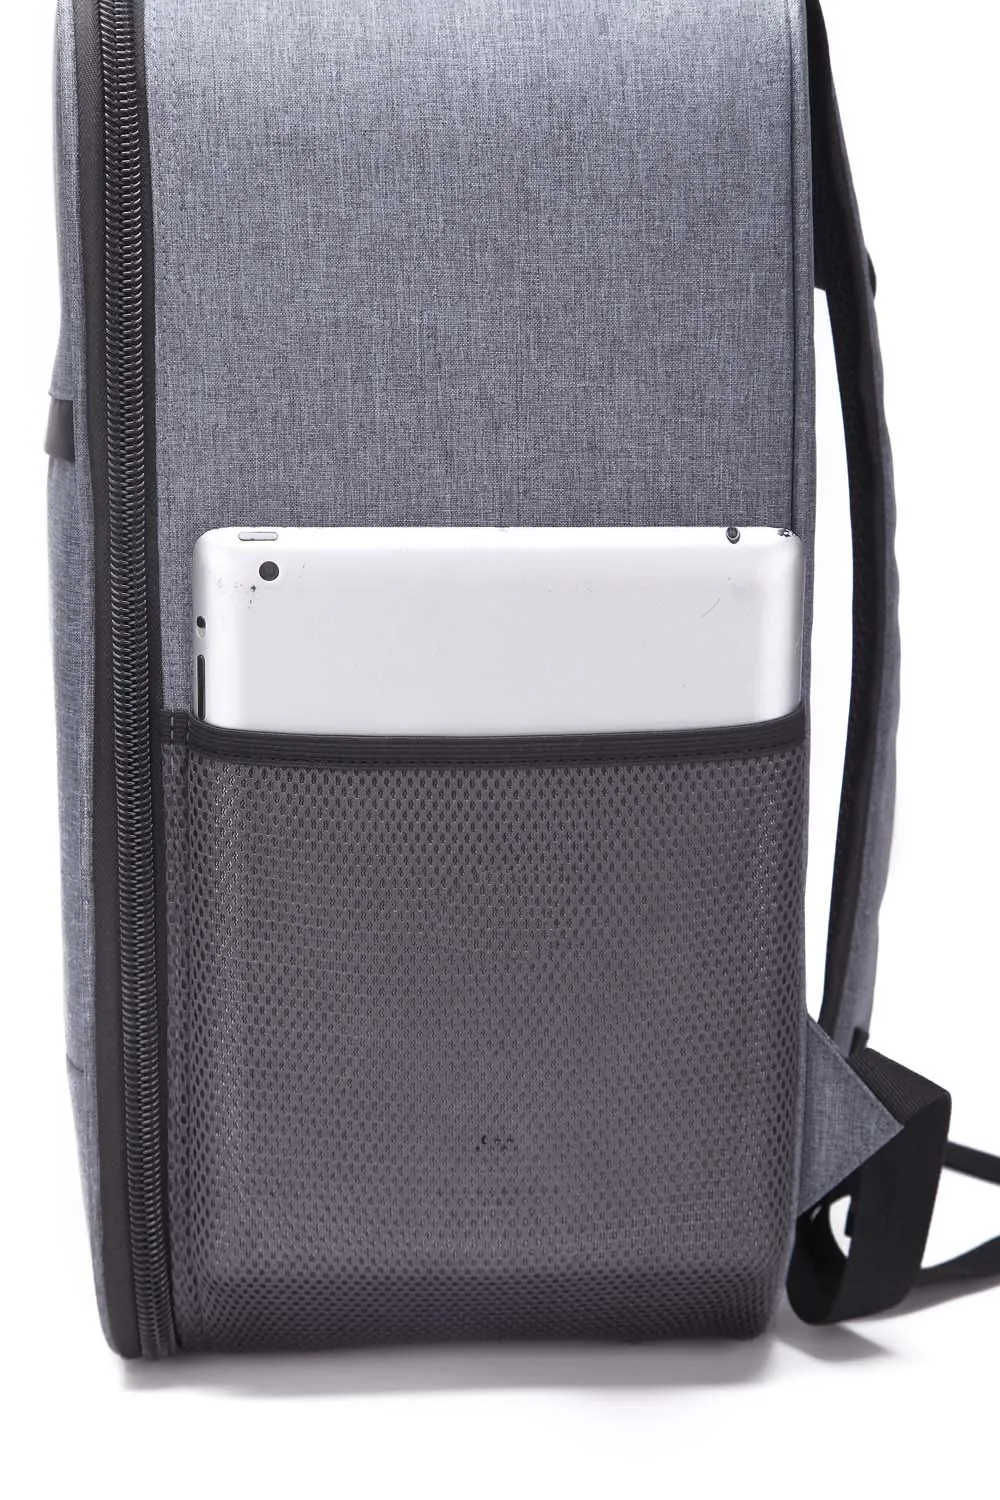 Ouhaobin рюкзак сумка на плечо для Xiaomi Mi дрона 4K 1080P FPV RC Квадрокоптеры открытый противоударный рюкзак мягкая сумка для переноски 423#2